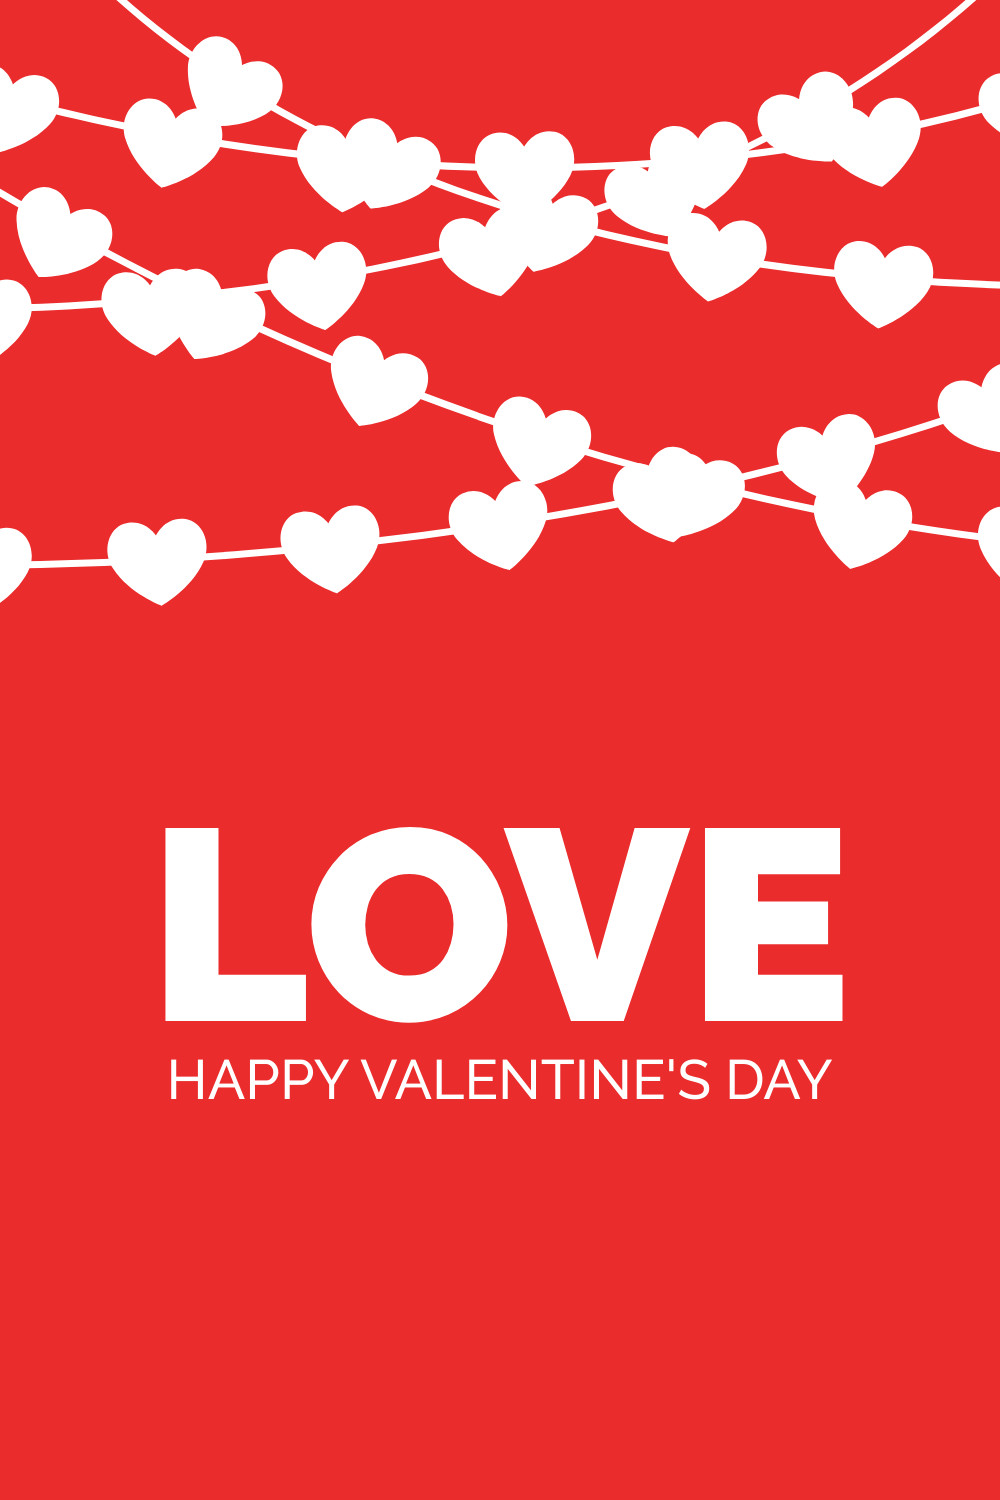 Love Happy Valentine's Day Facebook Cover 820x360